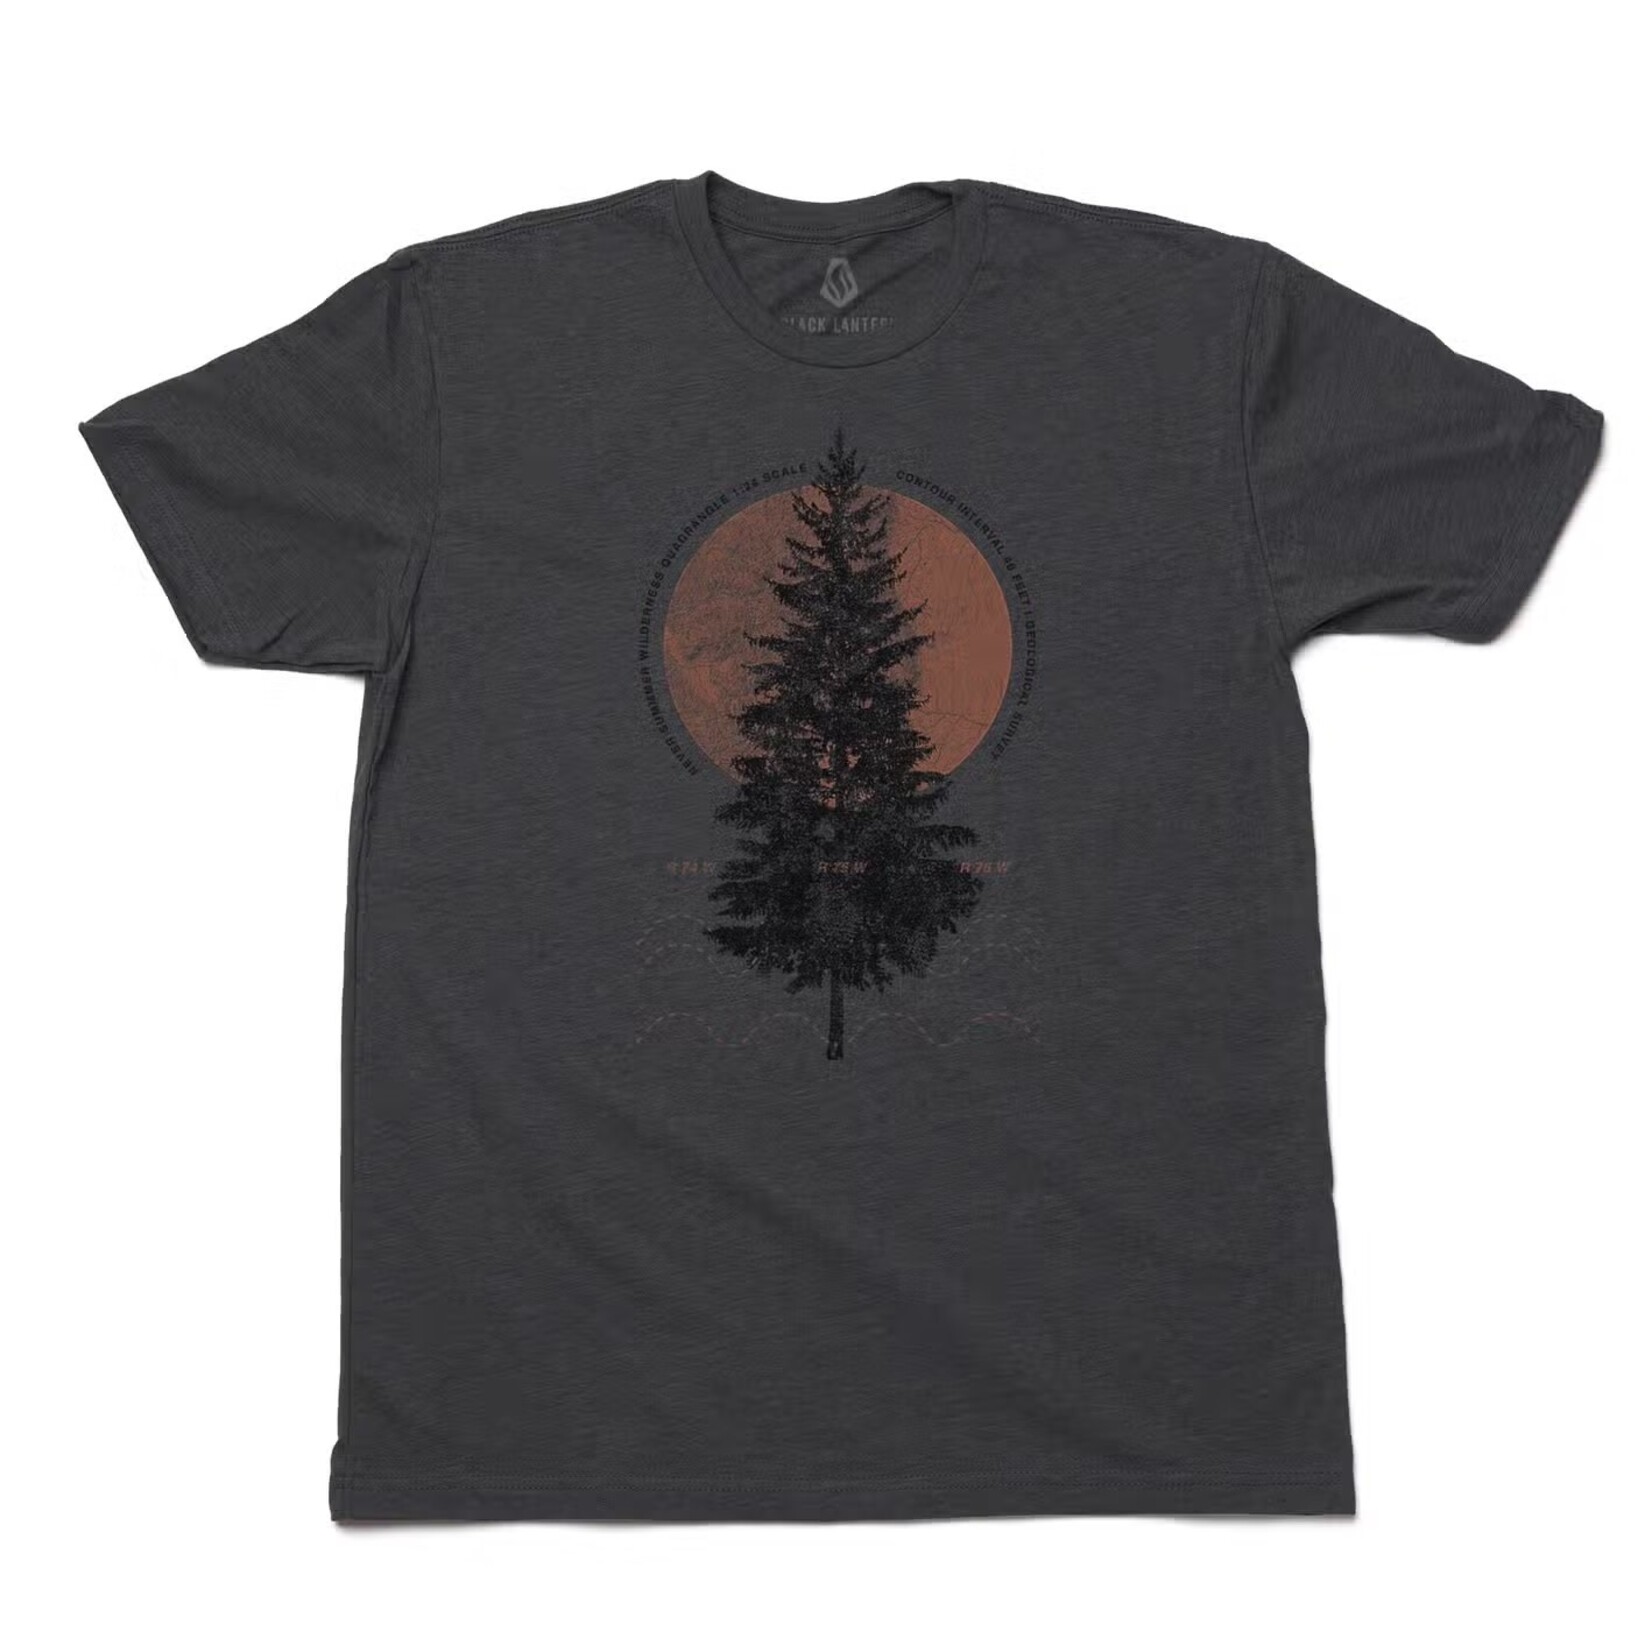 Black Lantern Map of the Pines - Men's/Unisex T-Shirt